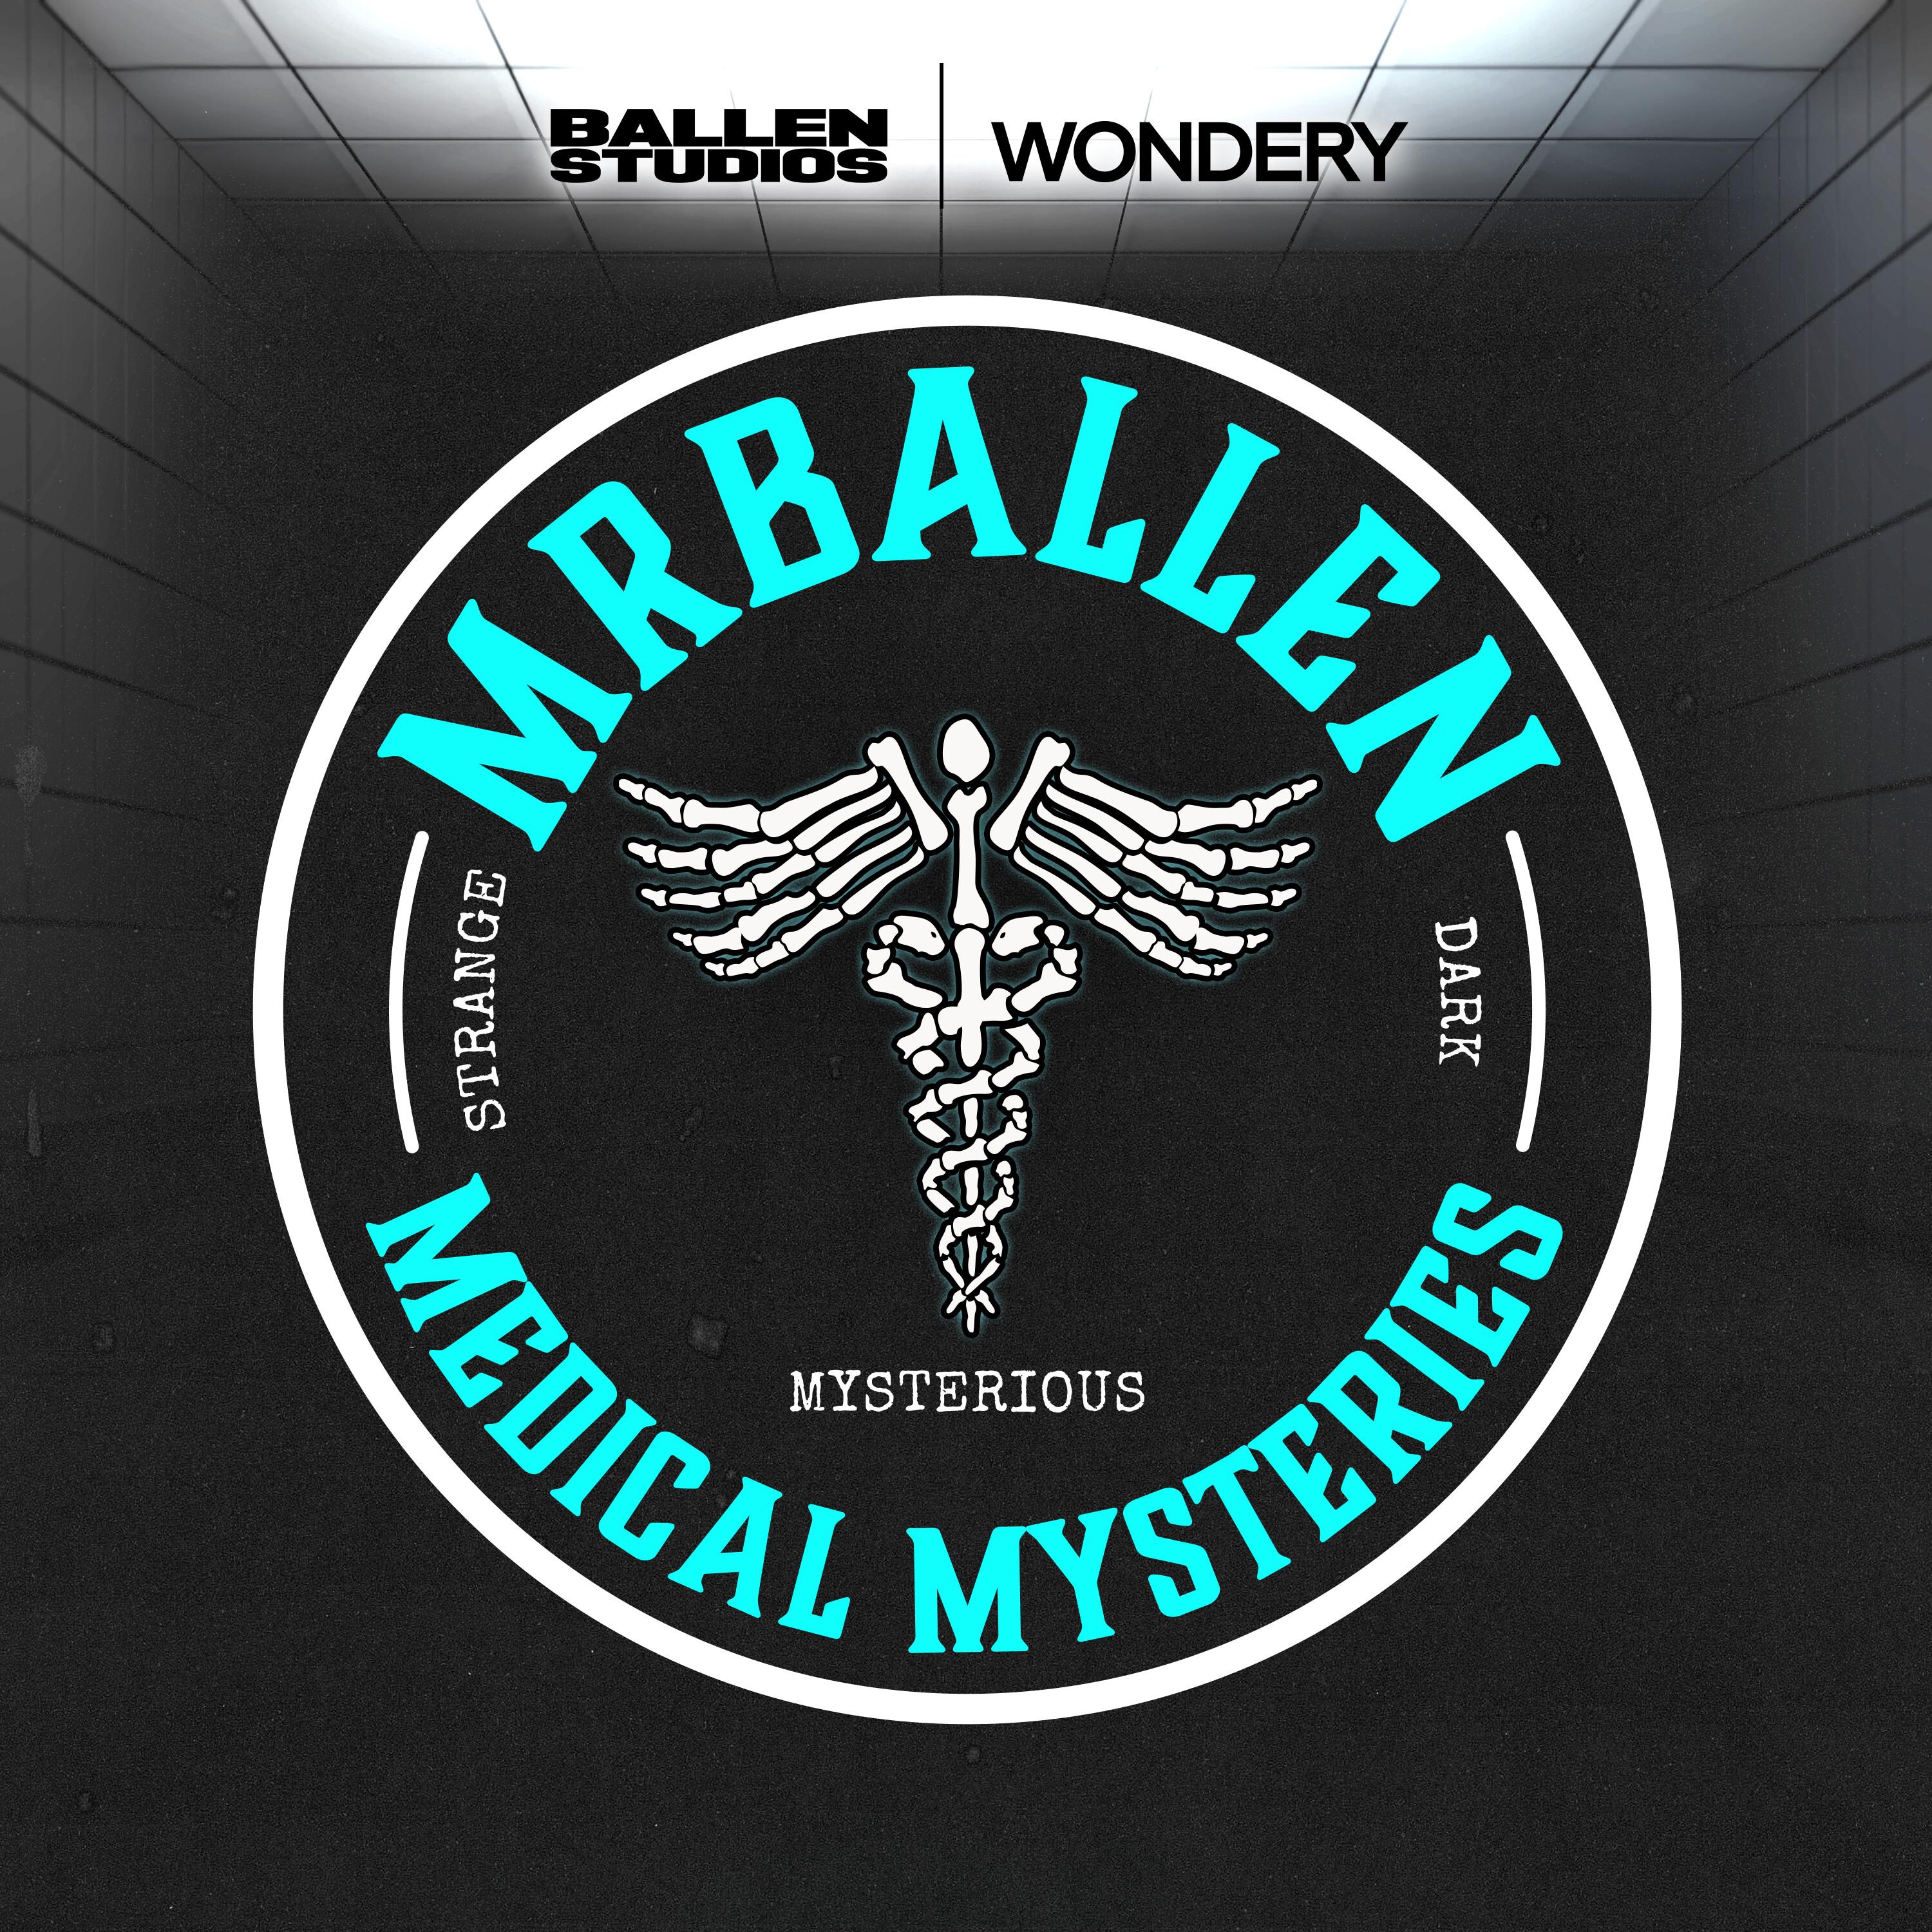 MrBallen's Medical Mysteries